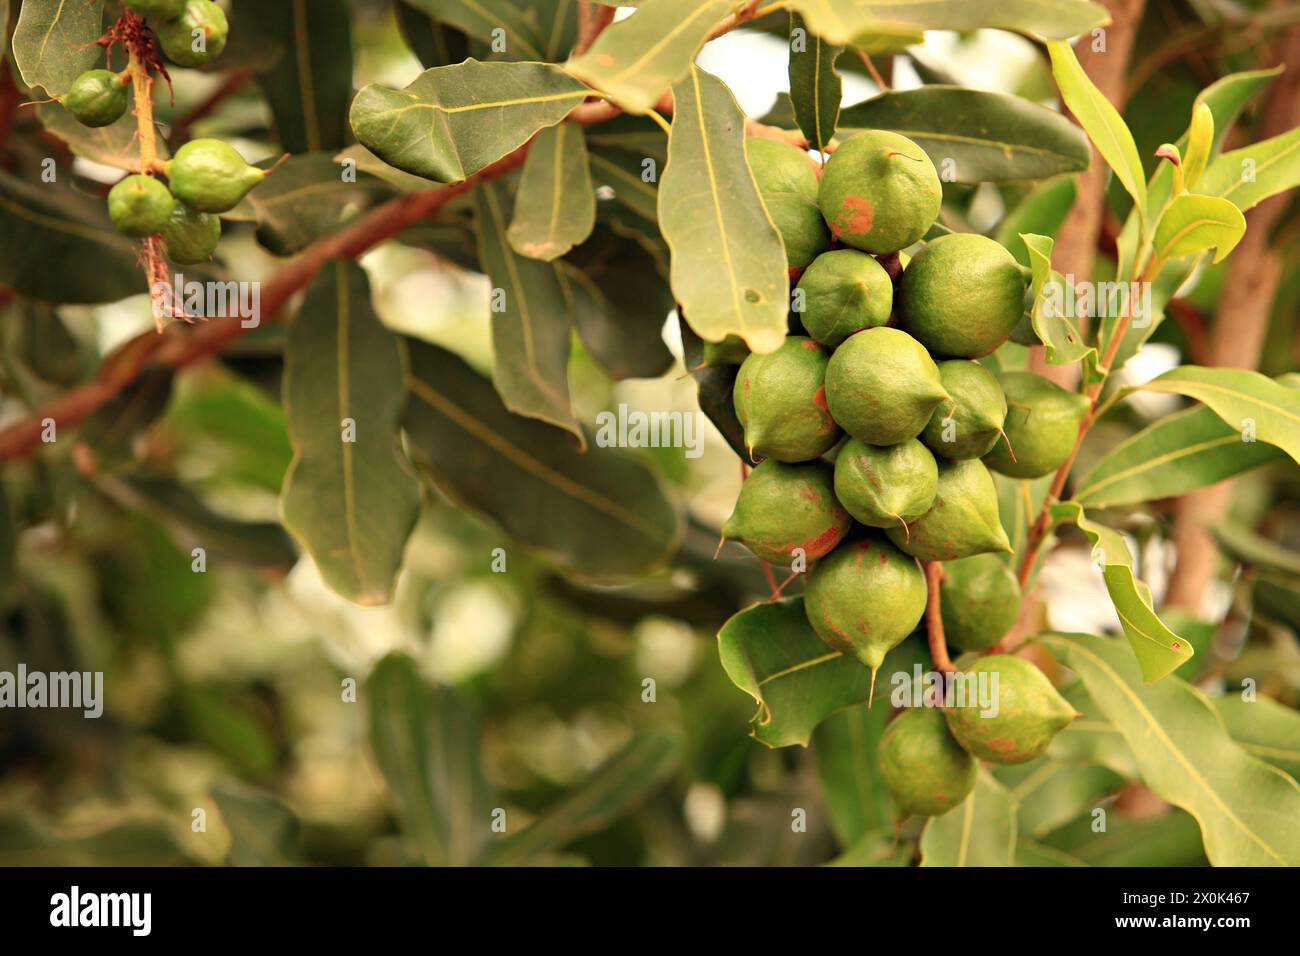 Raw of Macadamia integrifolia or Macadamia nut hanging on plant Stock Photo